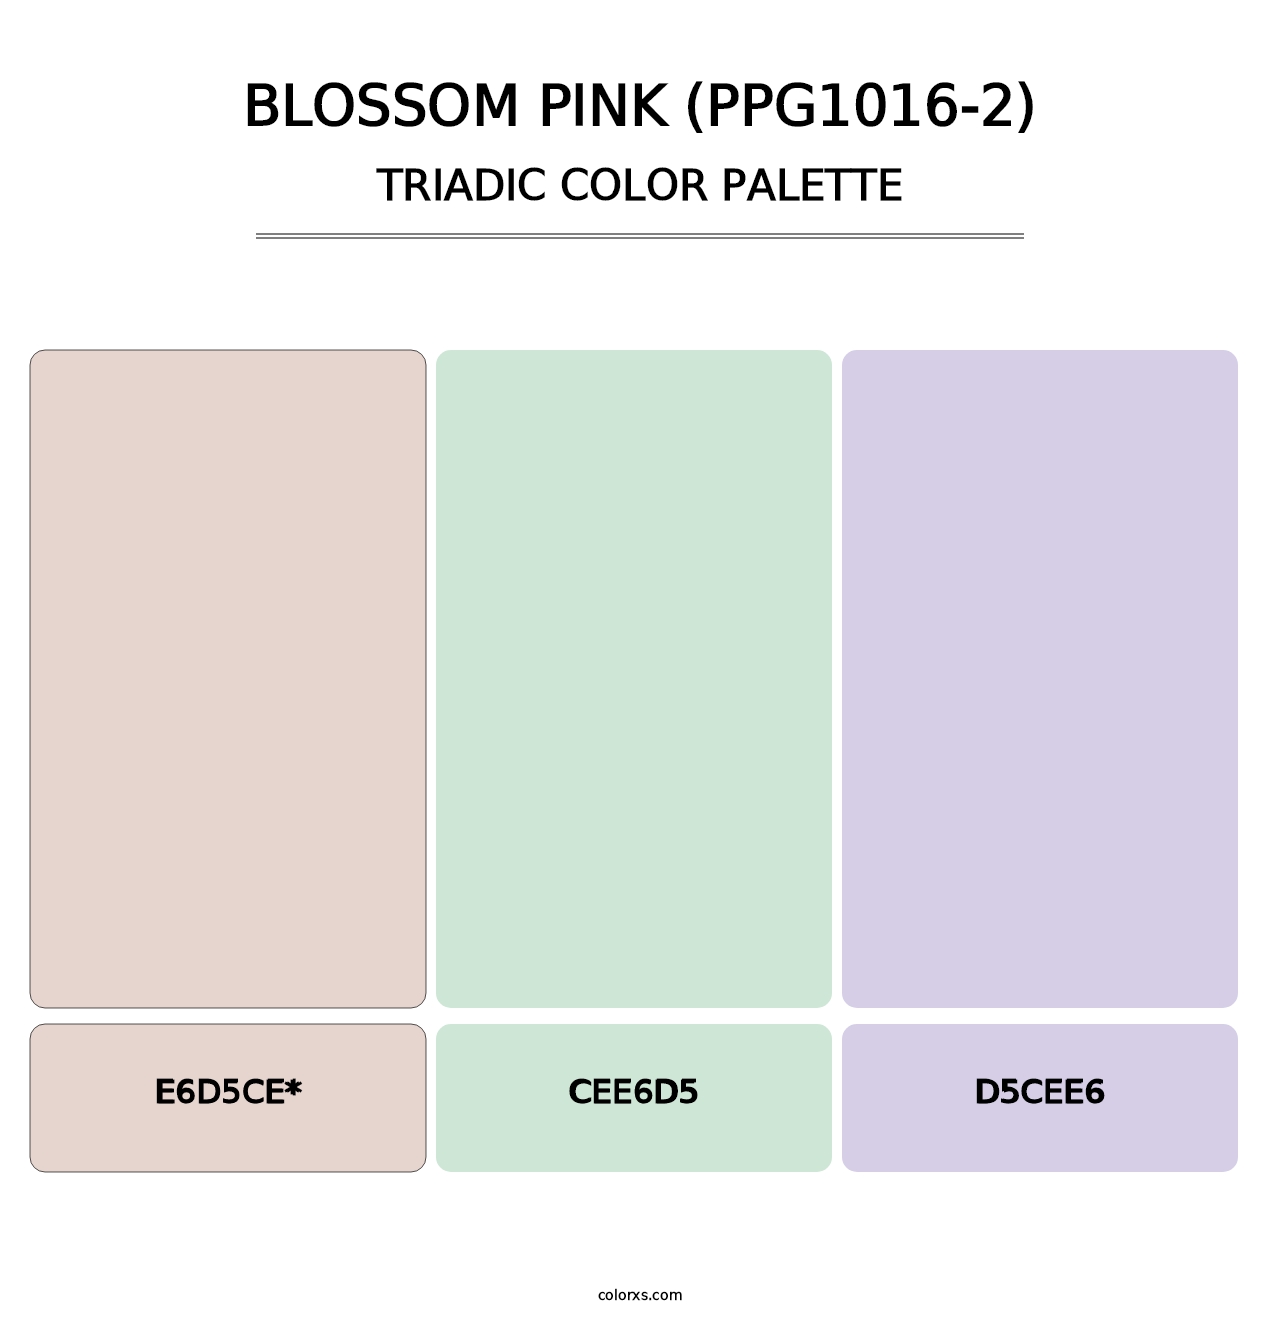 Blossom Pink (PPG1016-2) - Triadic Color Palette